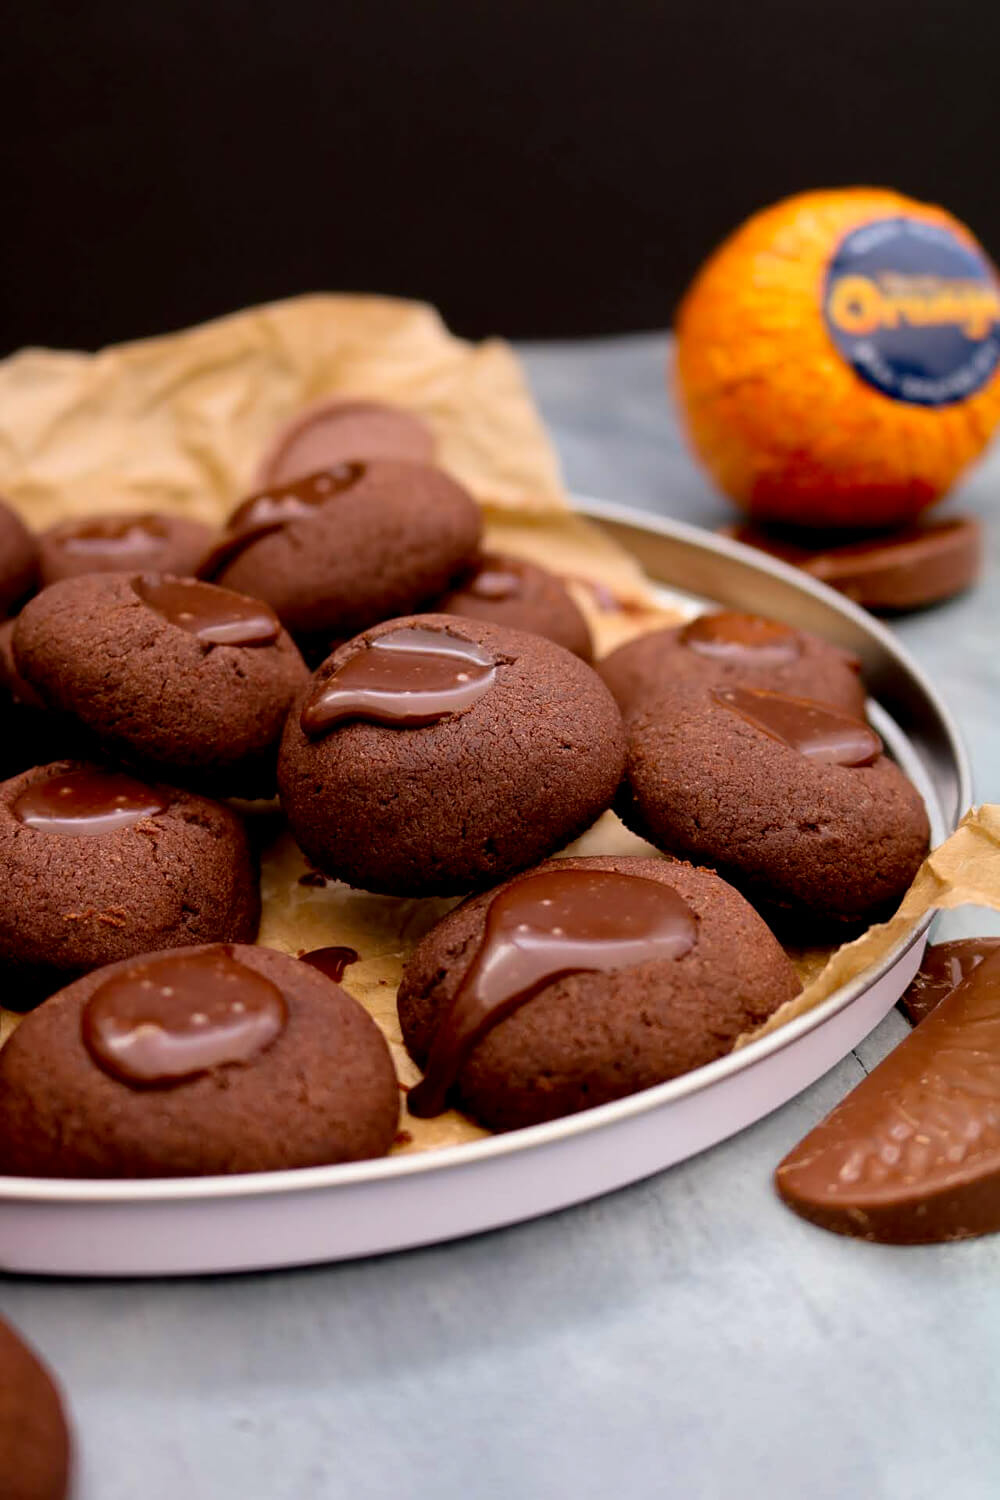 Chocolate Orange Thumbprint Cookies | Take Some Whisks